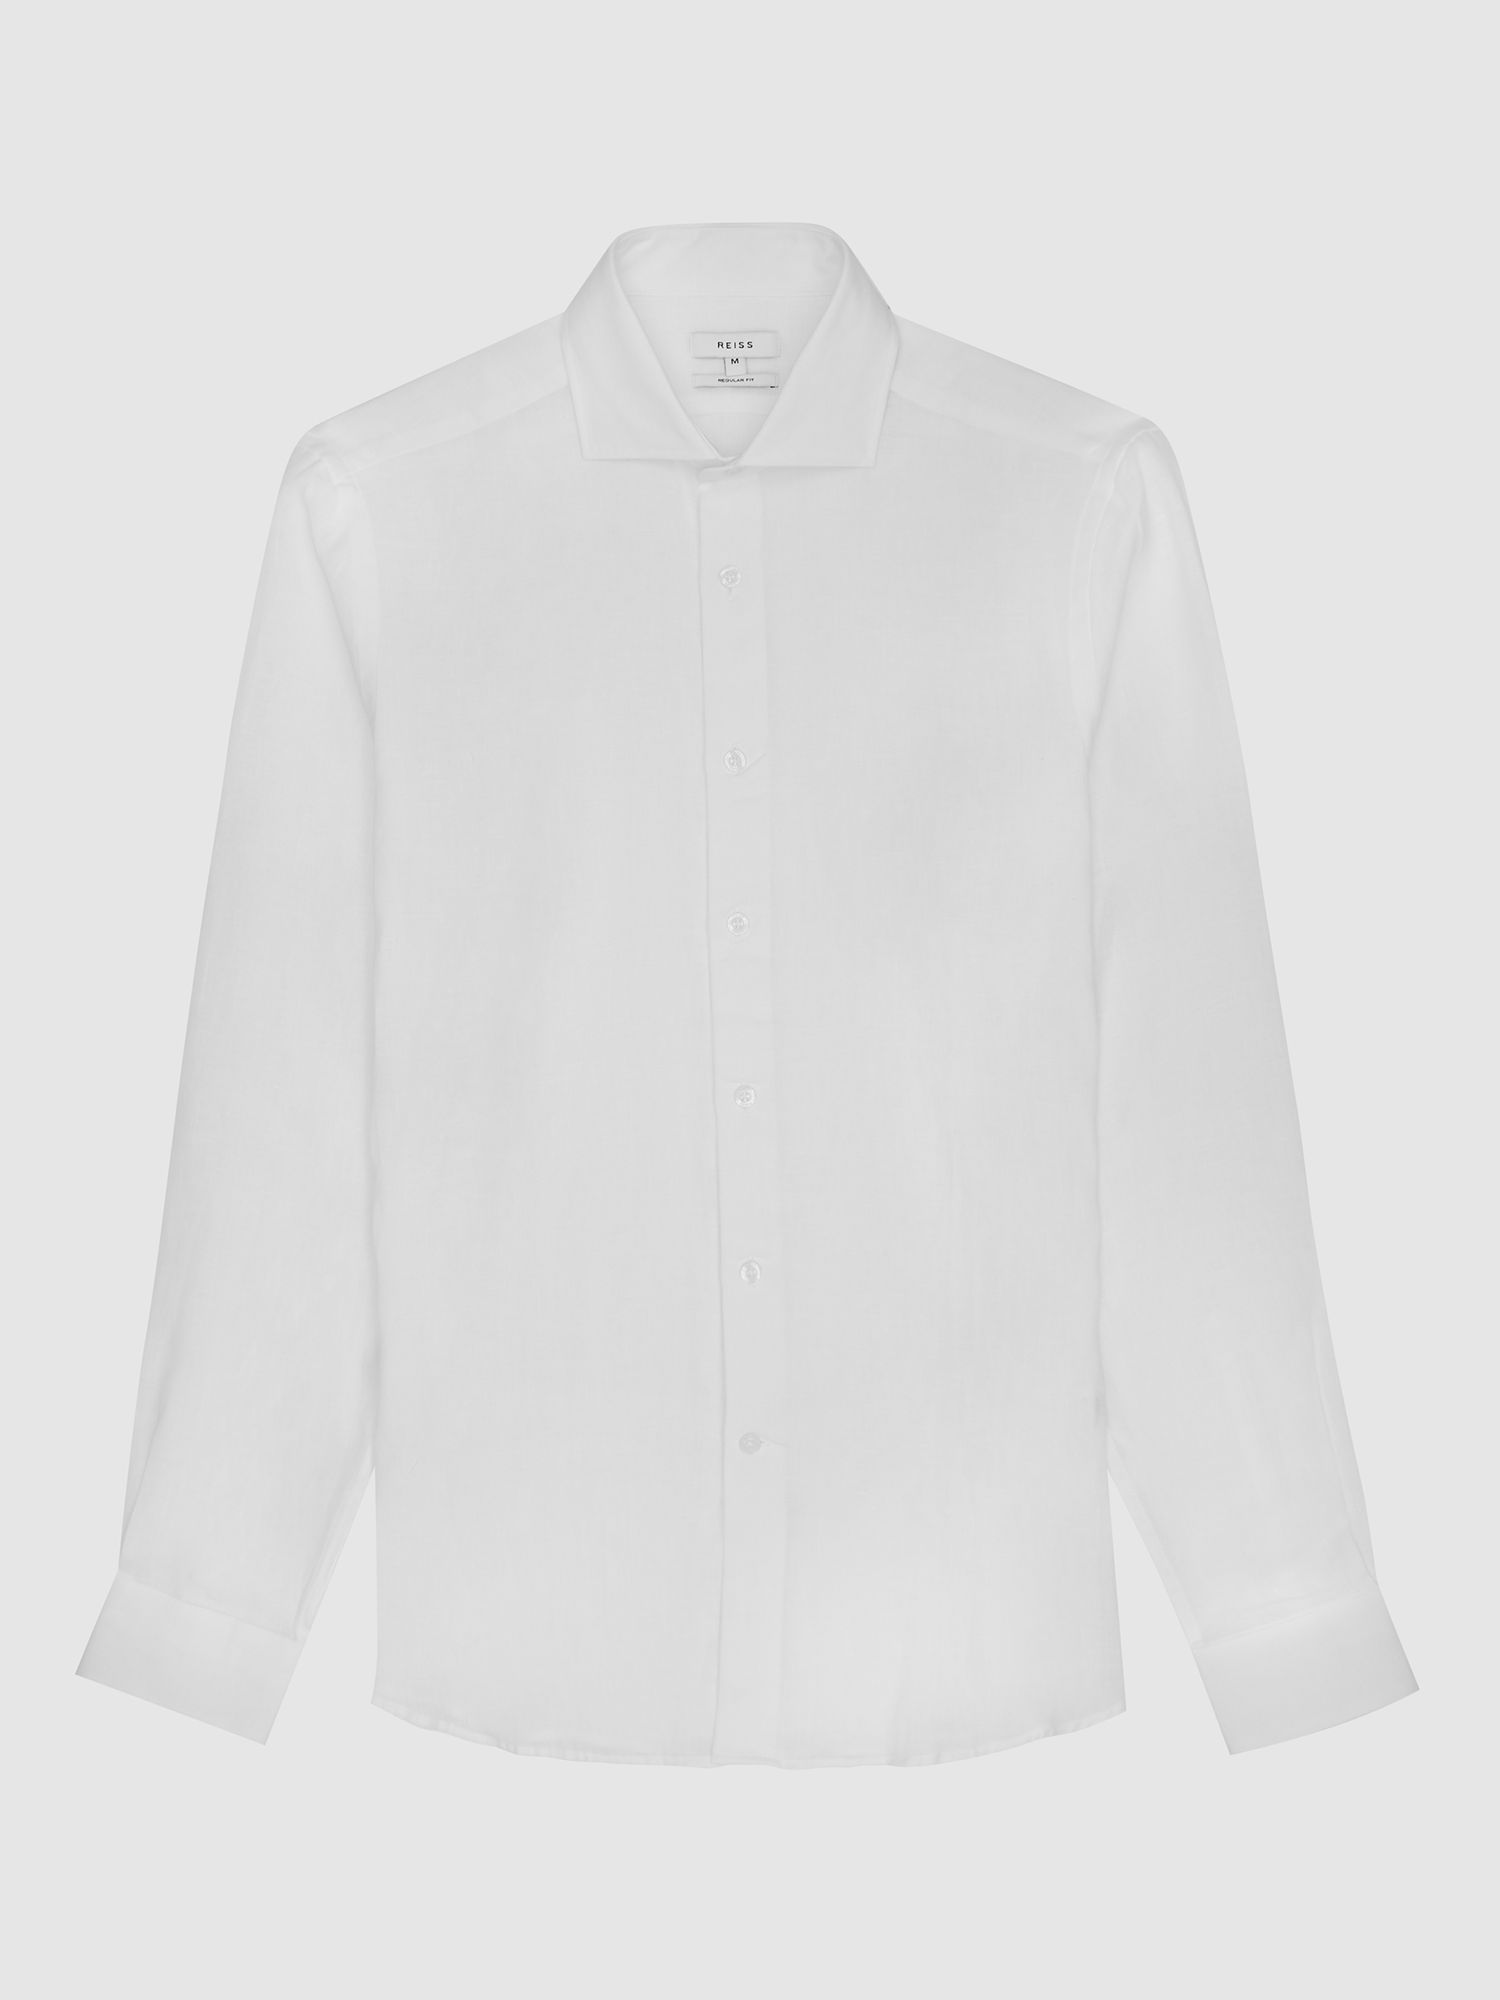 Reiss Ruban Regular Fit Linen Shirt, White at John Lewis & Partners